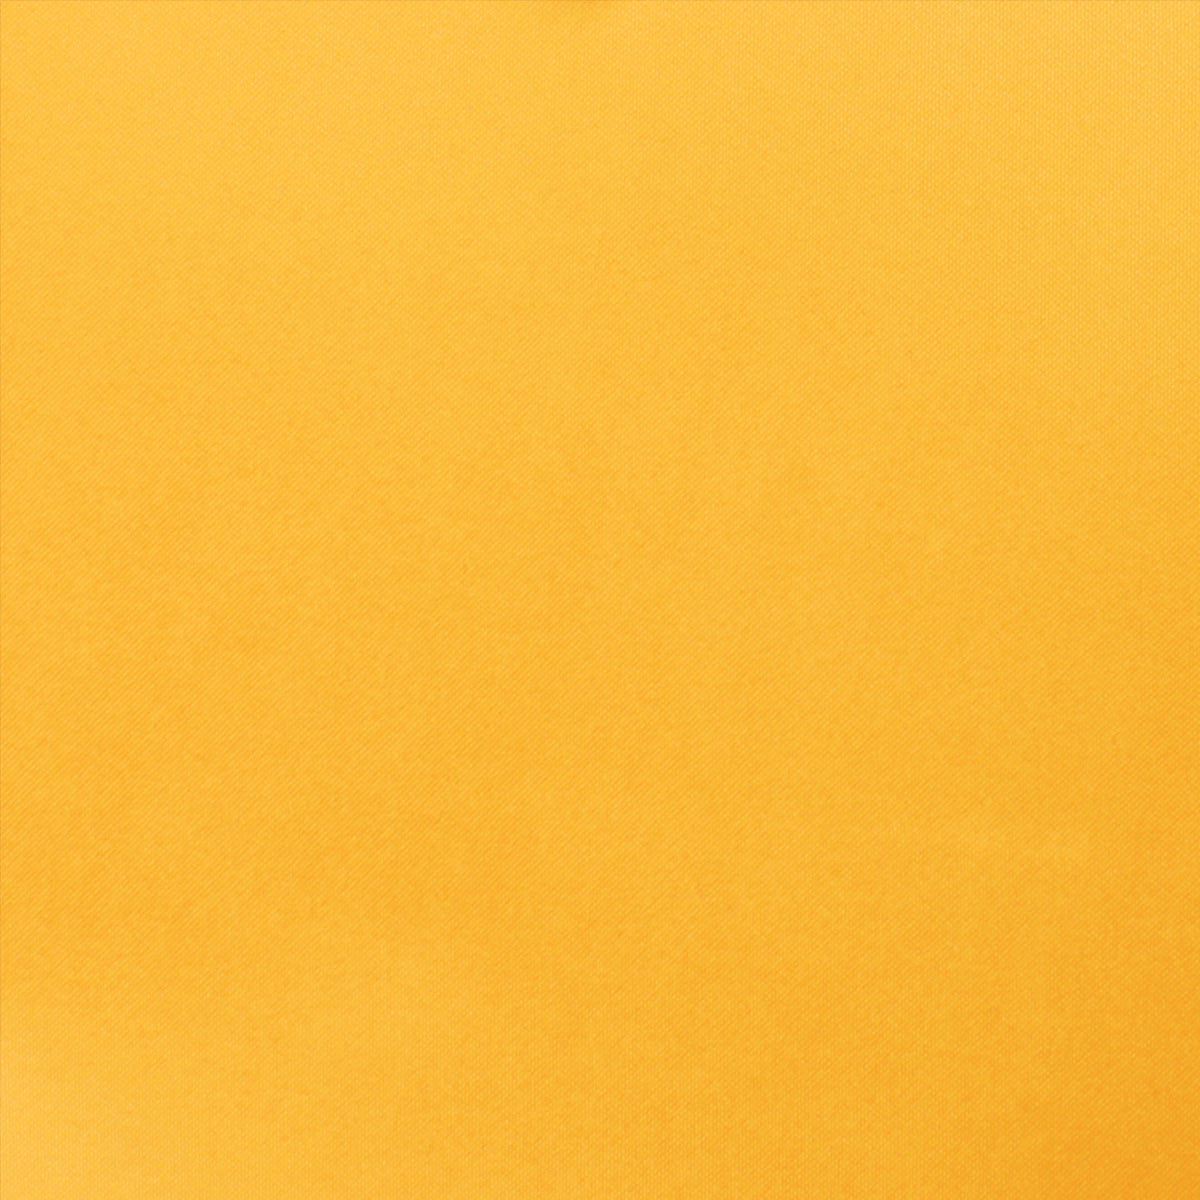 Honey Gold Yellow Satin Pocket Square Fabric